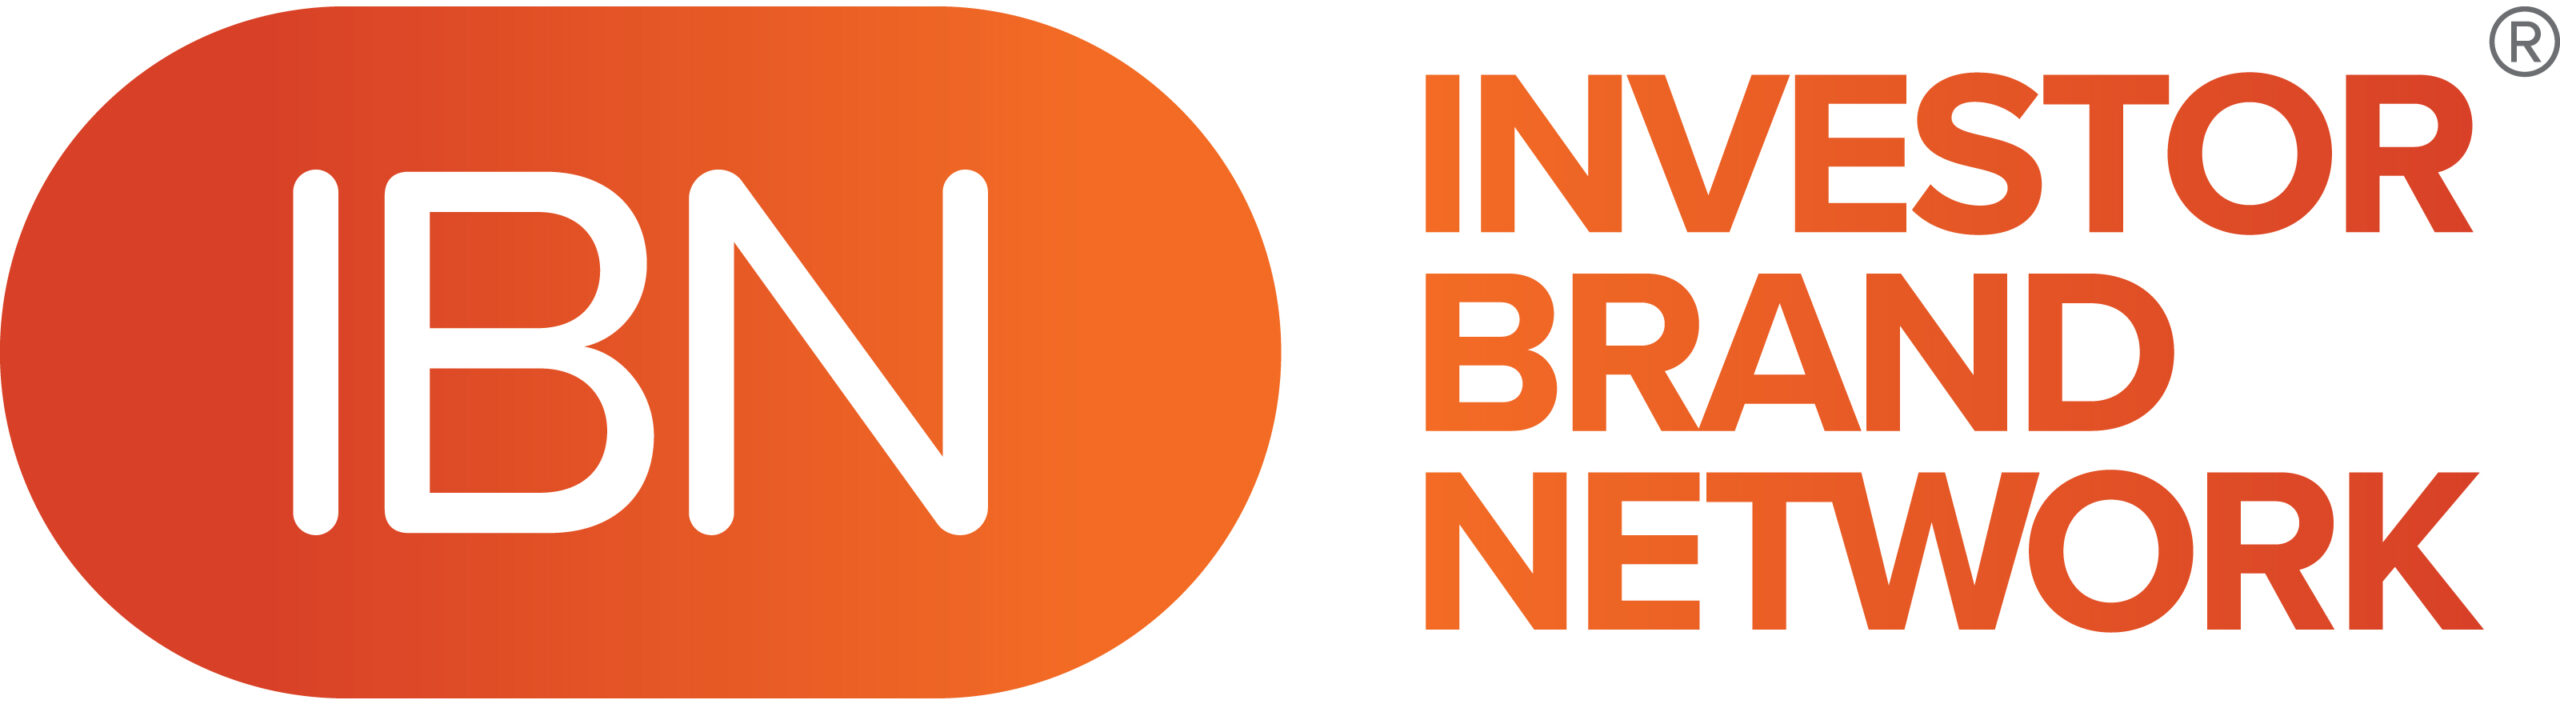 ibn-logo